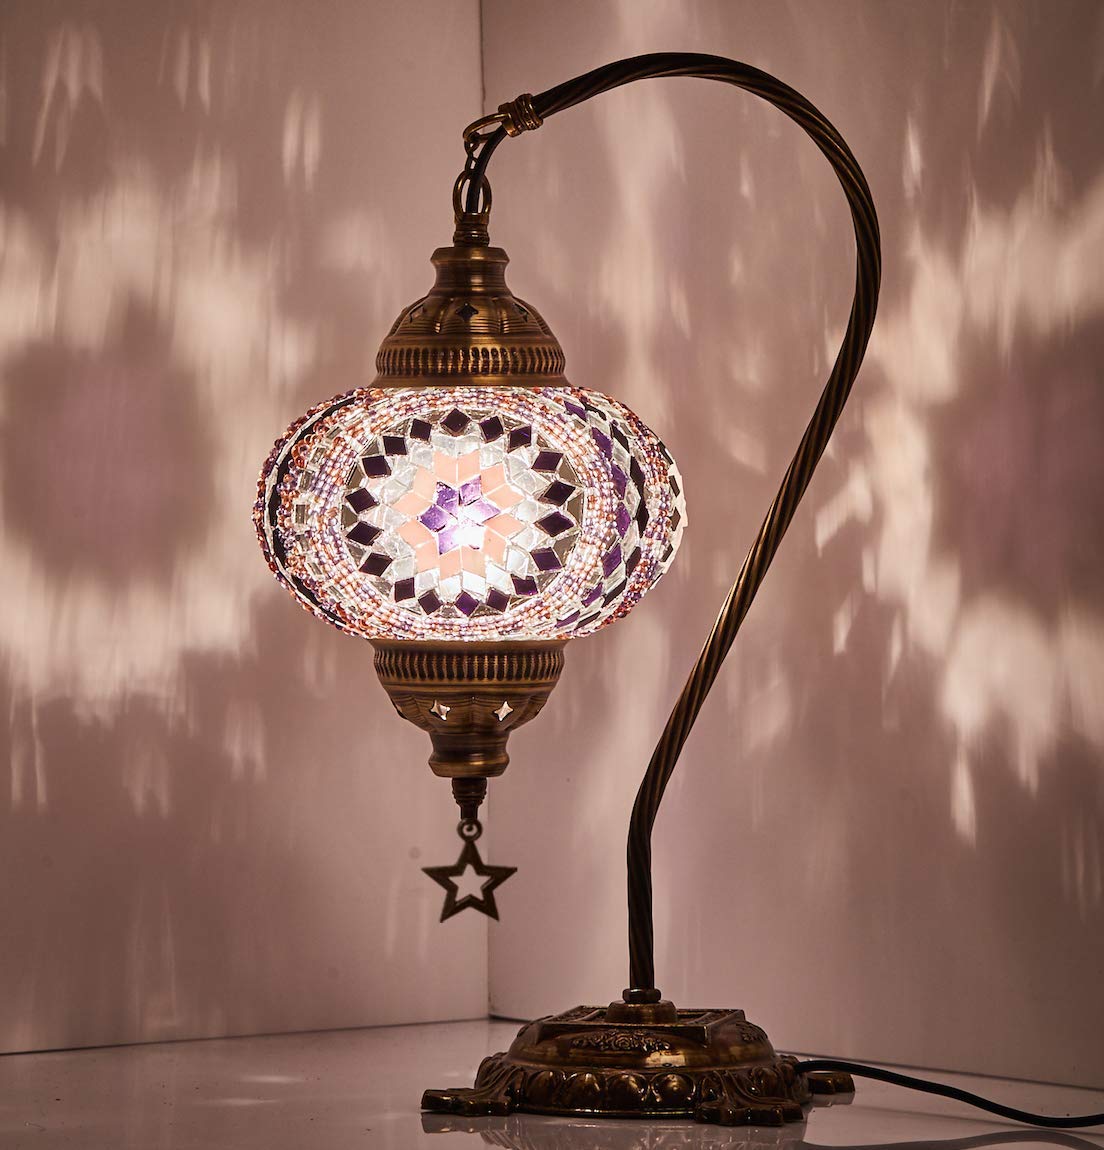 (33 Colors) DEMMEX Turkish Moroccan Mosaic Table Lamp with US Plug & Socket, Swan Neck Handmade Desk Bedside Table Night Lamp Decorative Tiffany La...